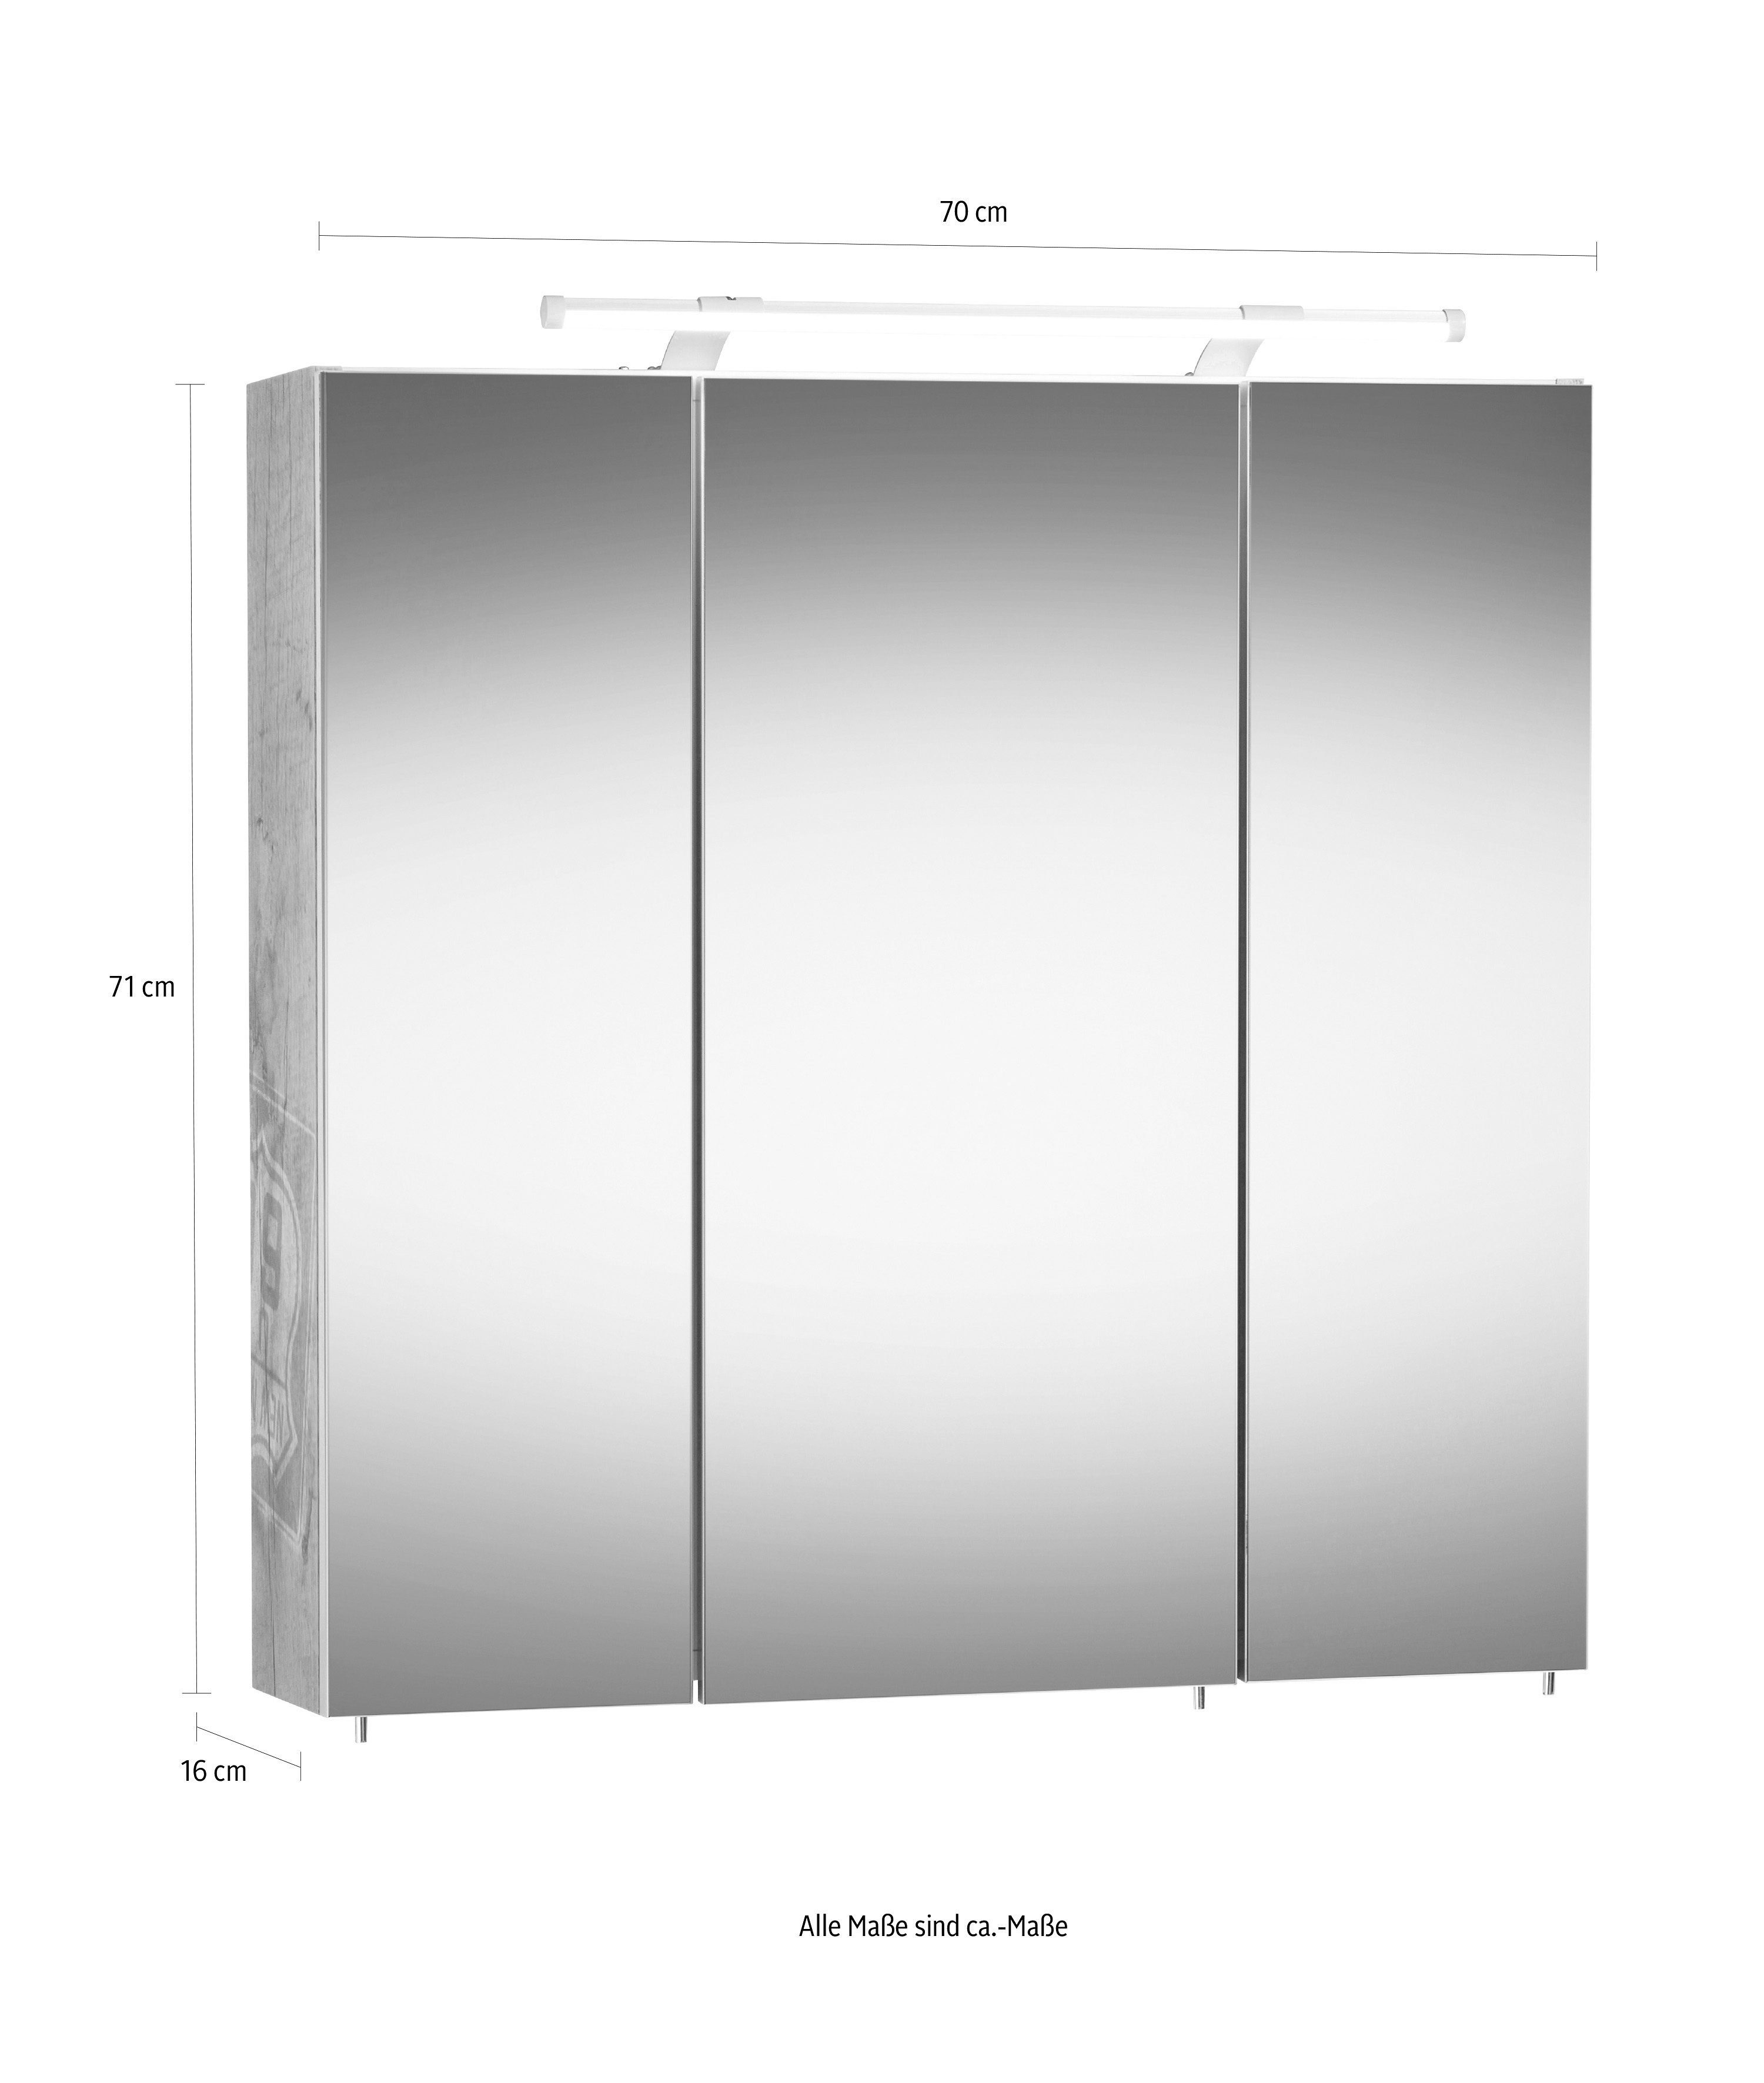 Schalter-/Steckdosenbox Spiegelschrank cm, Dorina | Schildmeyer 70 Breite grau eschefarben LED-Beleuchtung, 3-türig, eschefarben grau